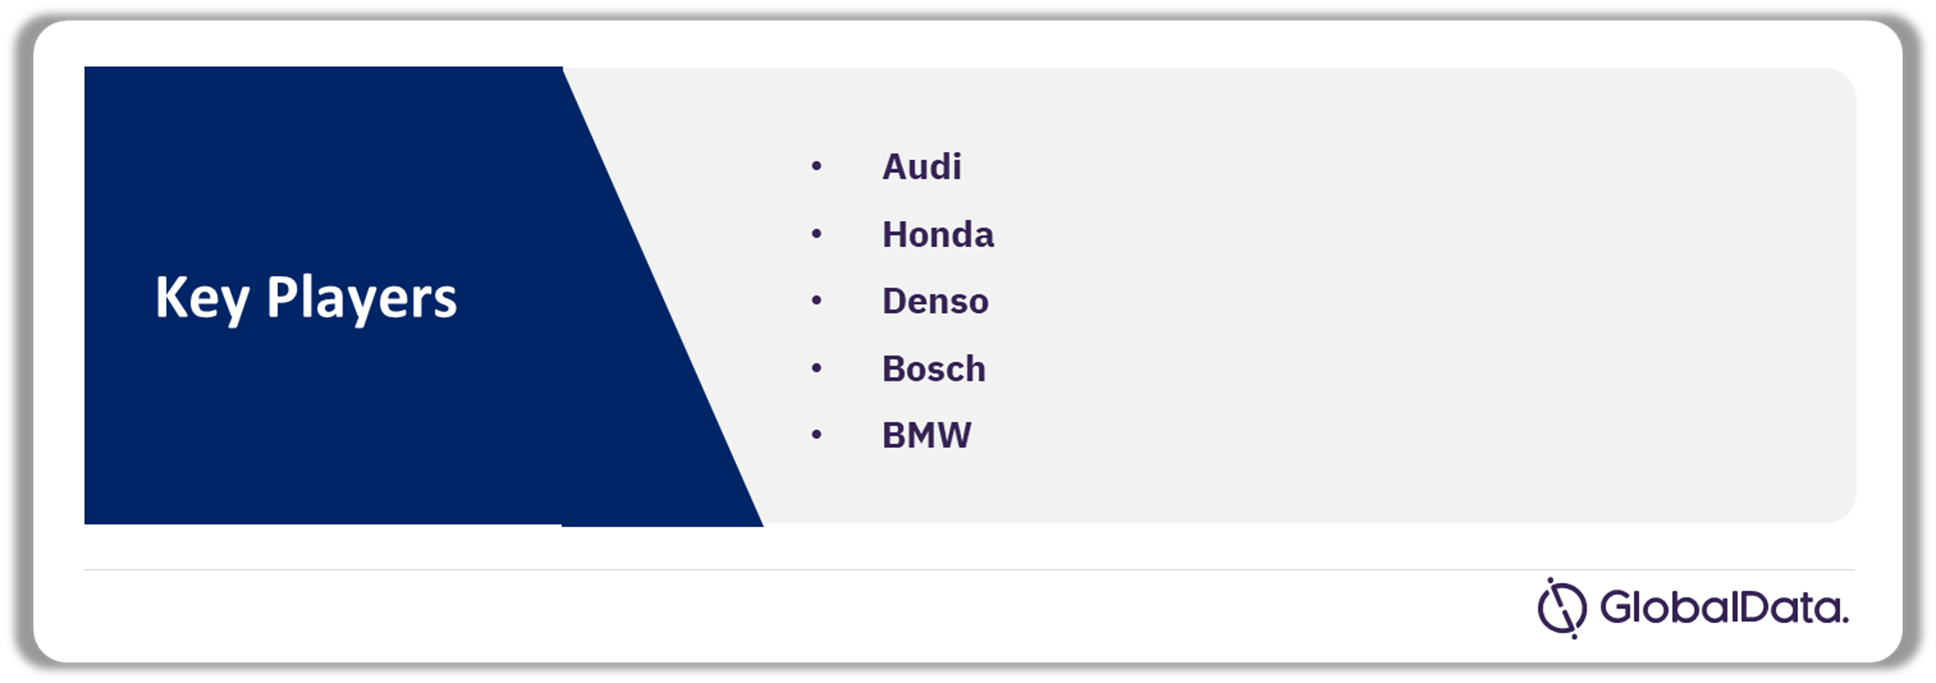 ADAS and Autonomous Vehicles Market Analysis by Companies